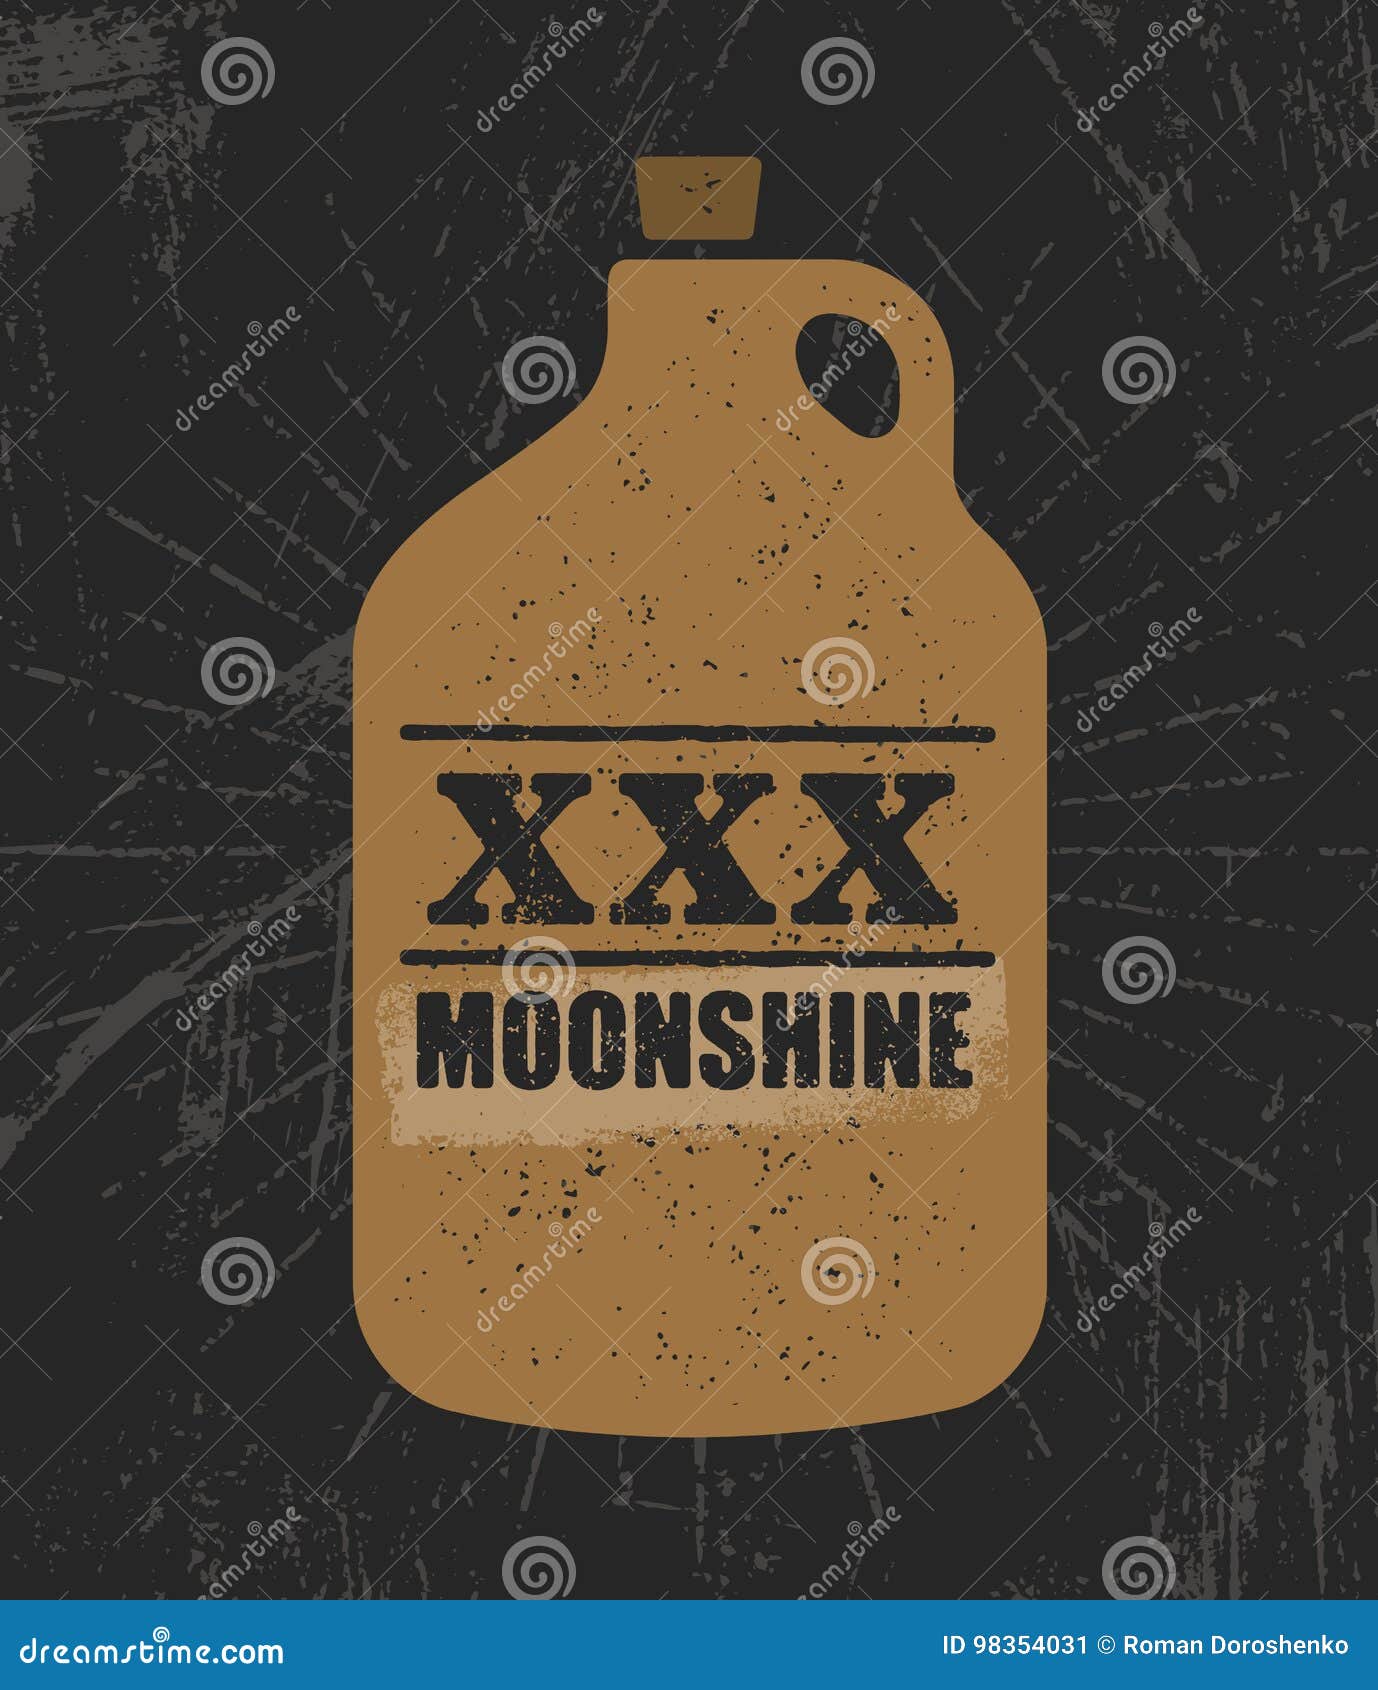 moonshine jug pure original corn spirit creative artisan . raw homemade alcohol creative sign